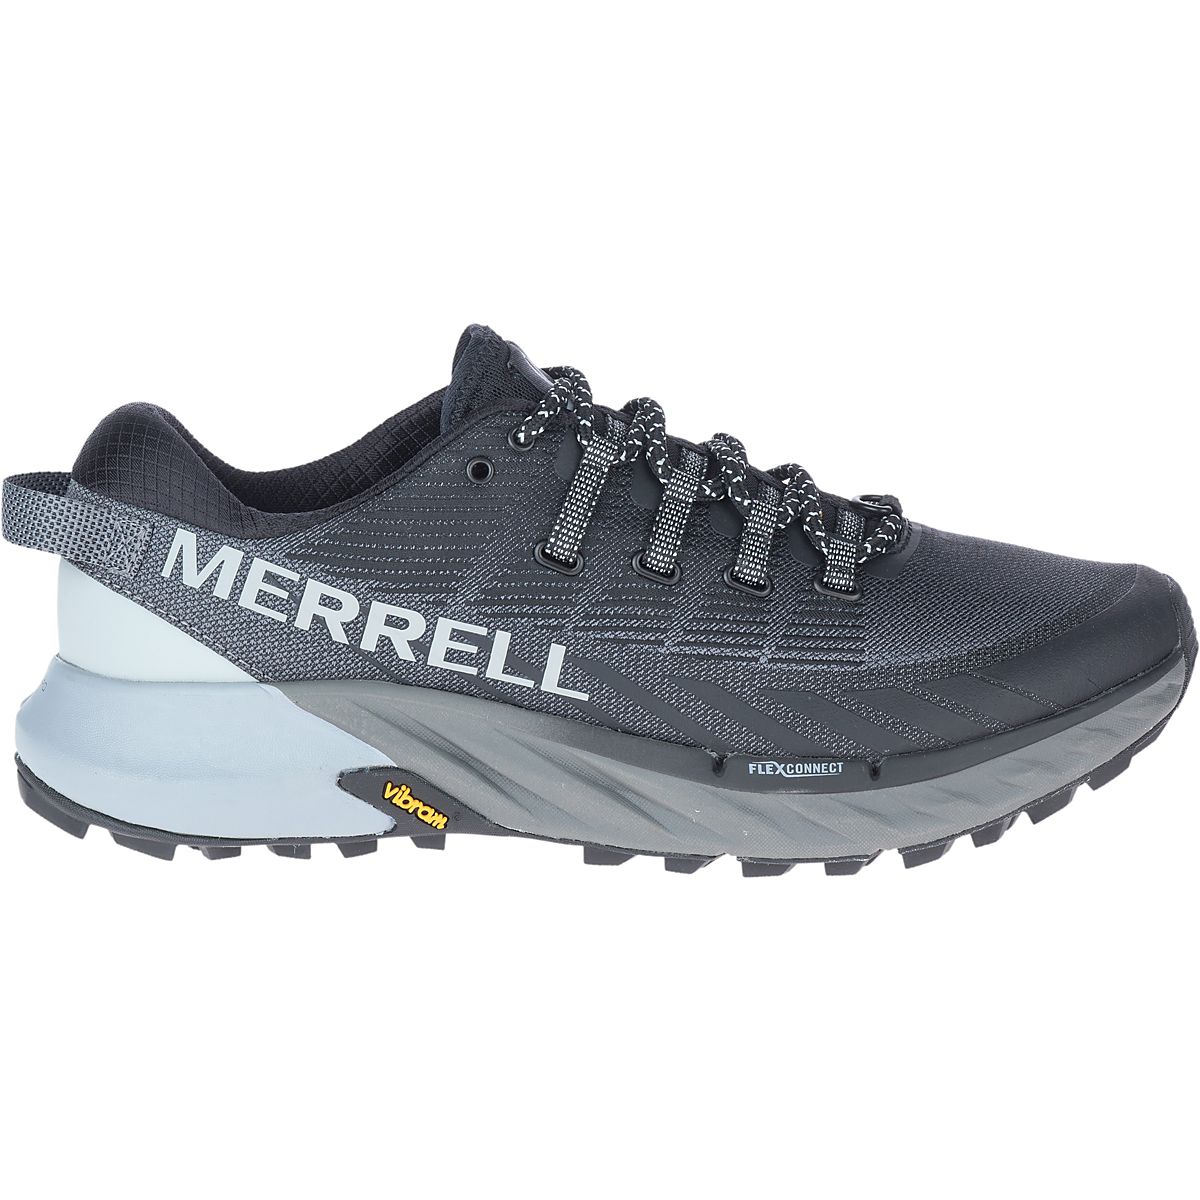 Merrell Agility Peak 4 Shoes Men's Closeout